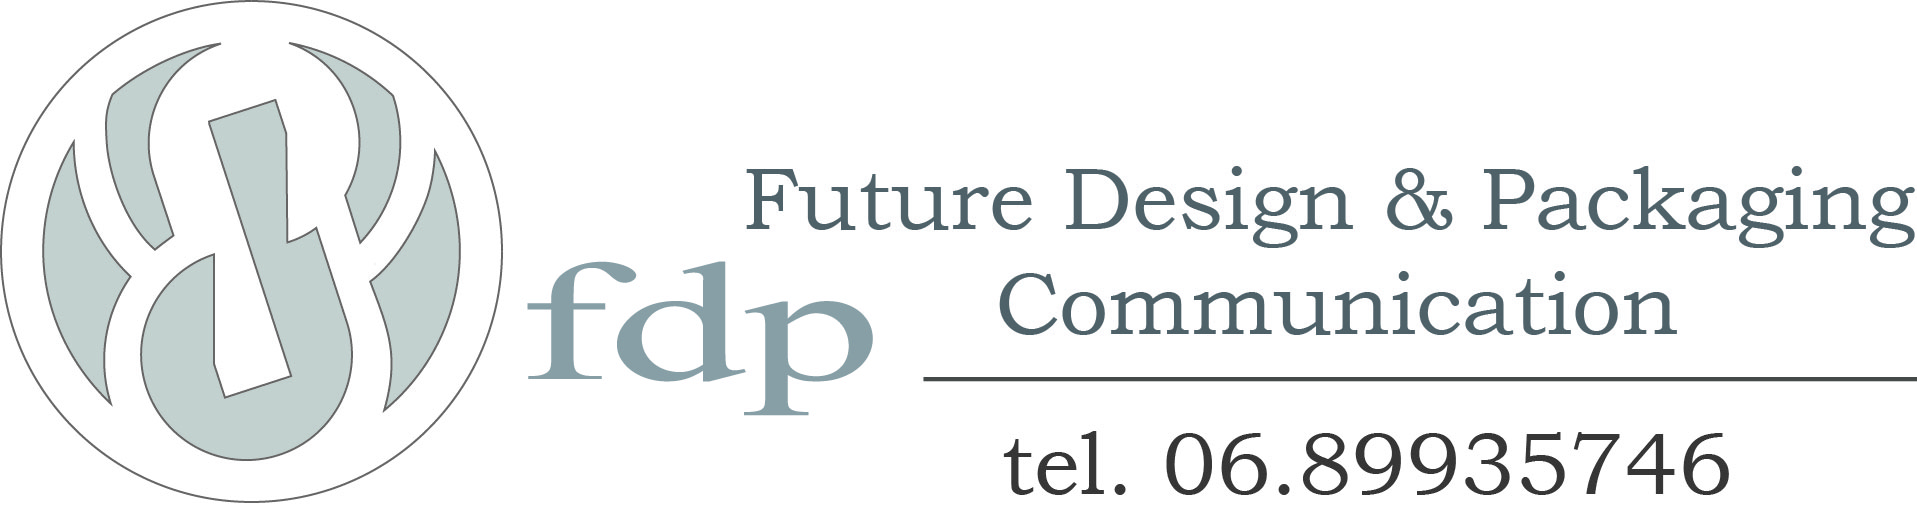 fdp_logo_tel.